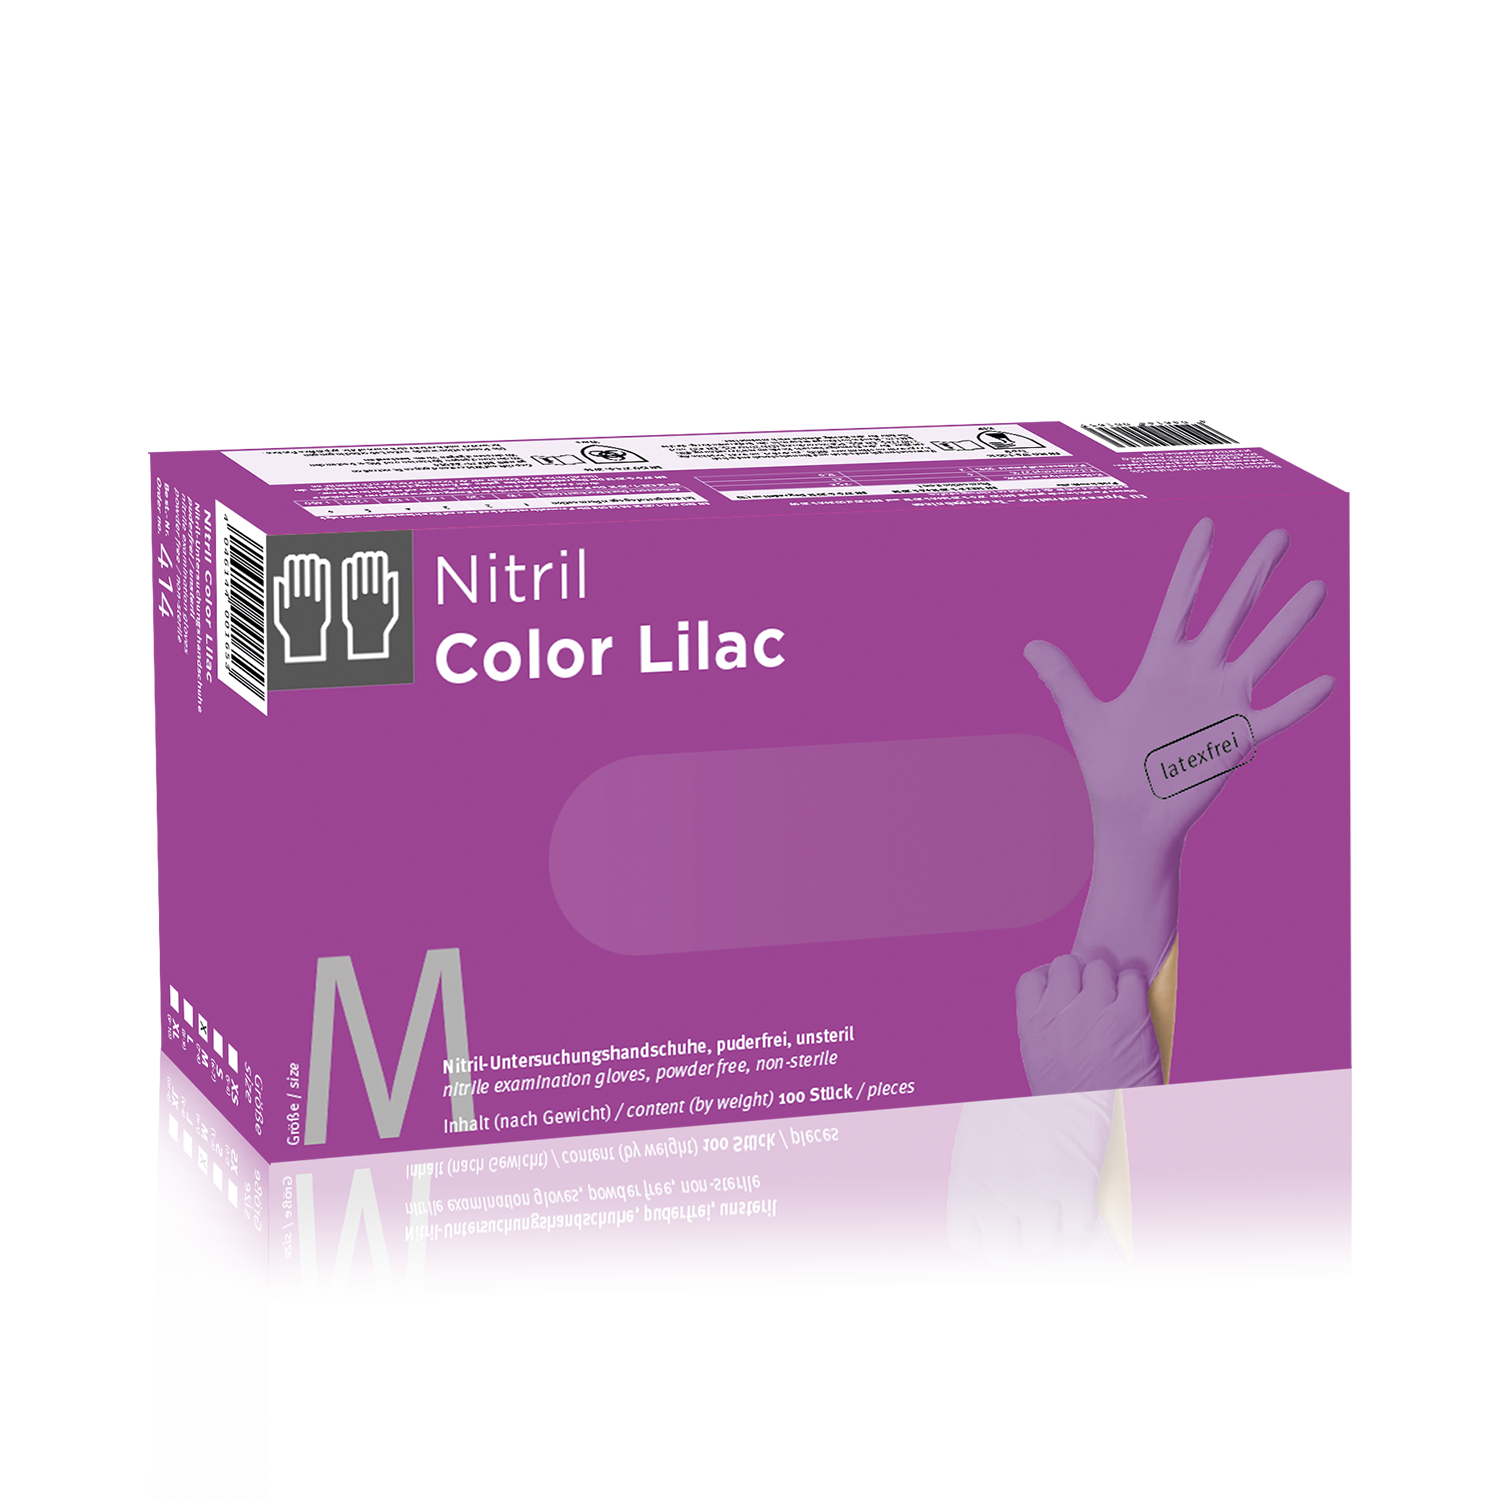 Gratis Muster Nitril Color lilac Einmalhandschuh puderfrei und latexfrei